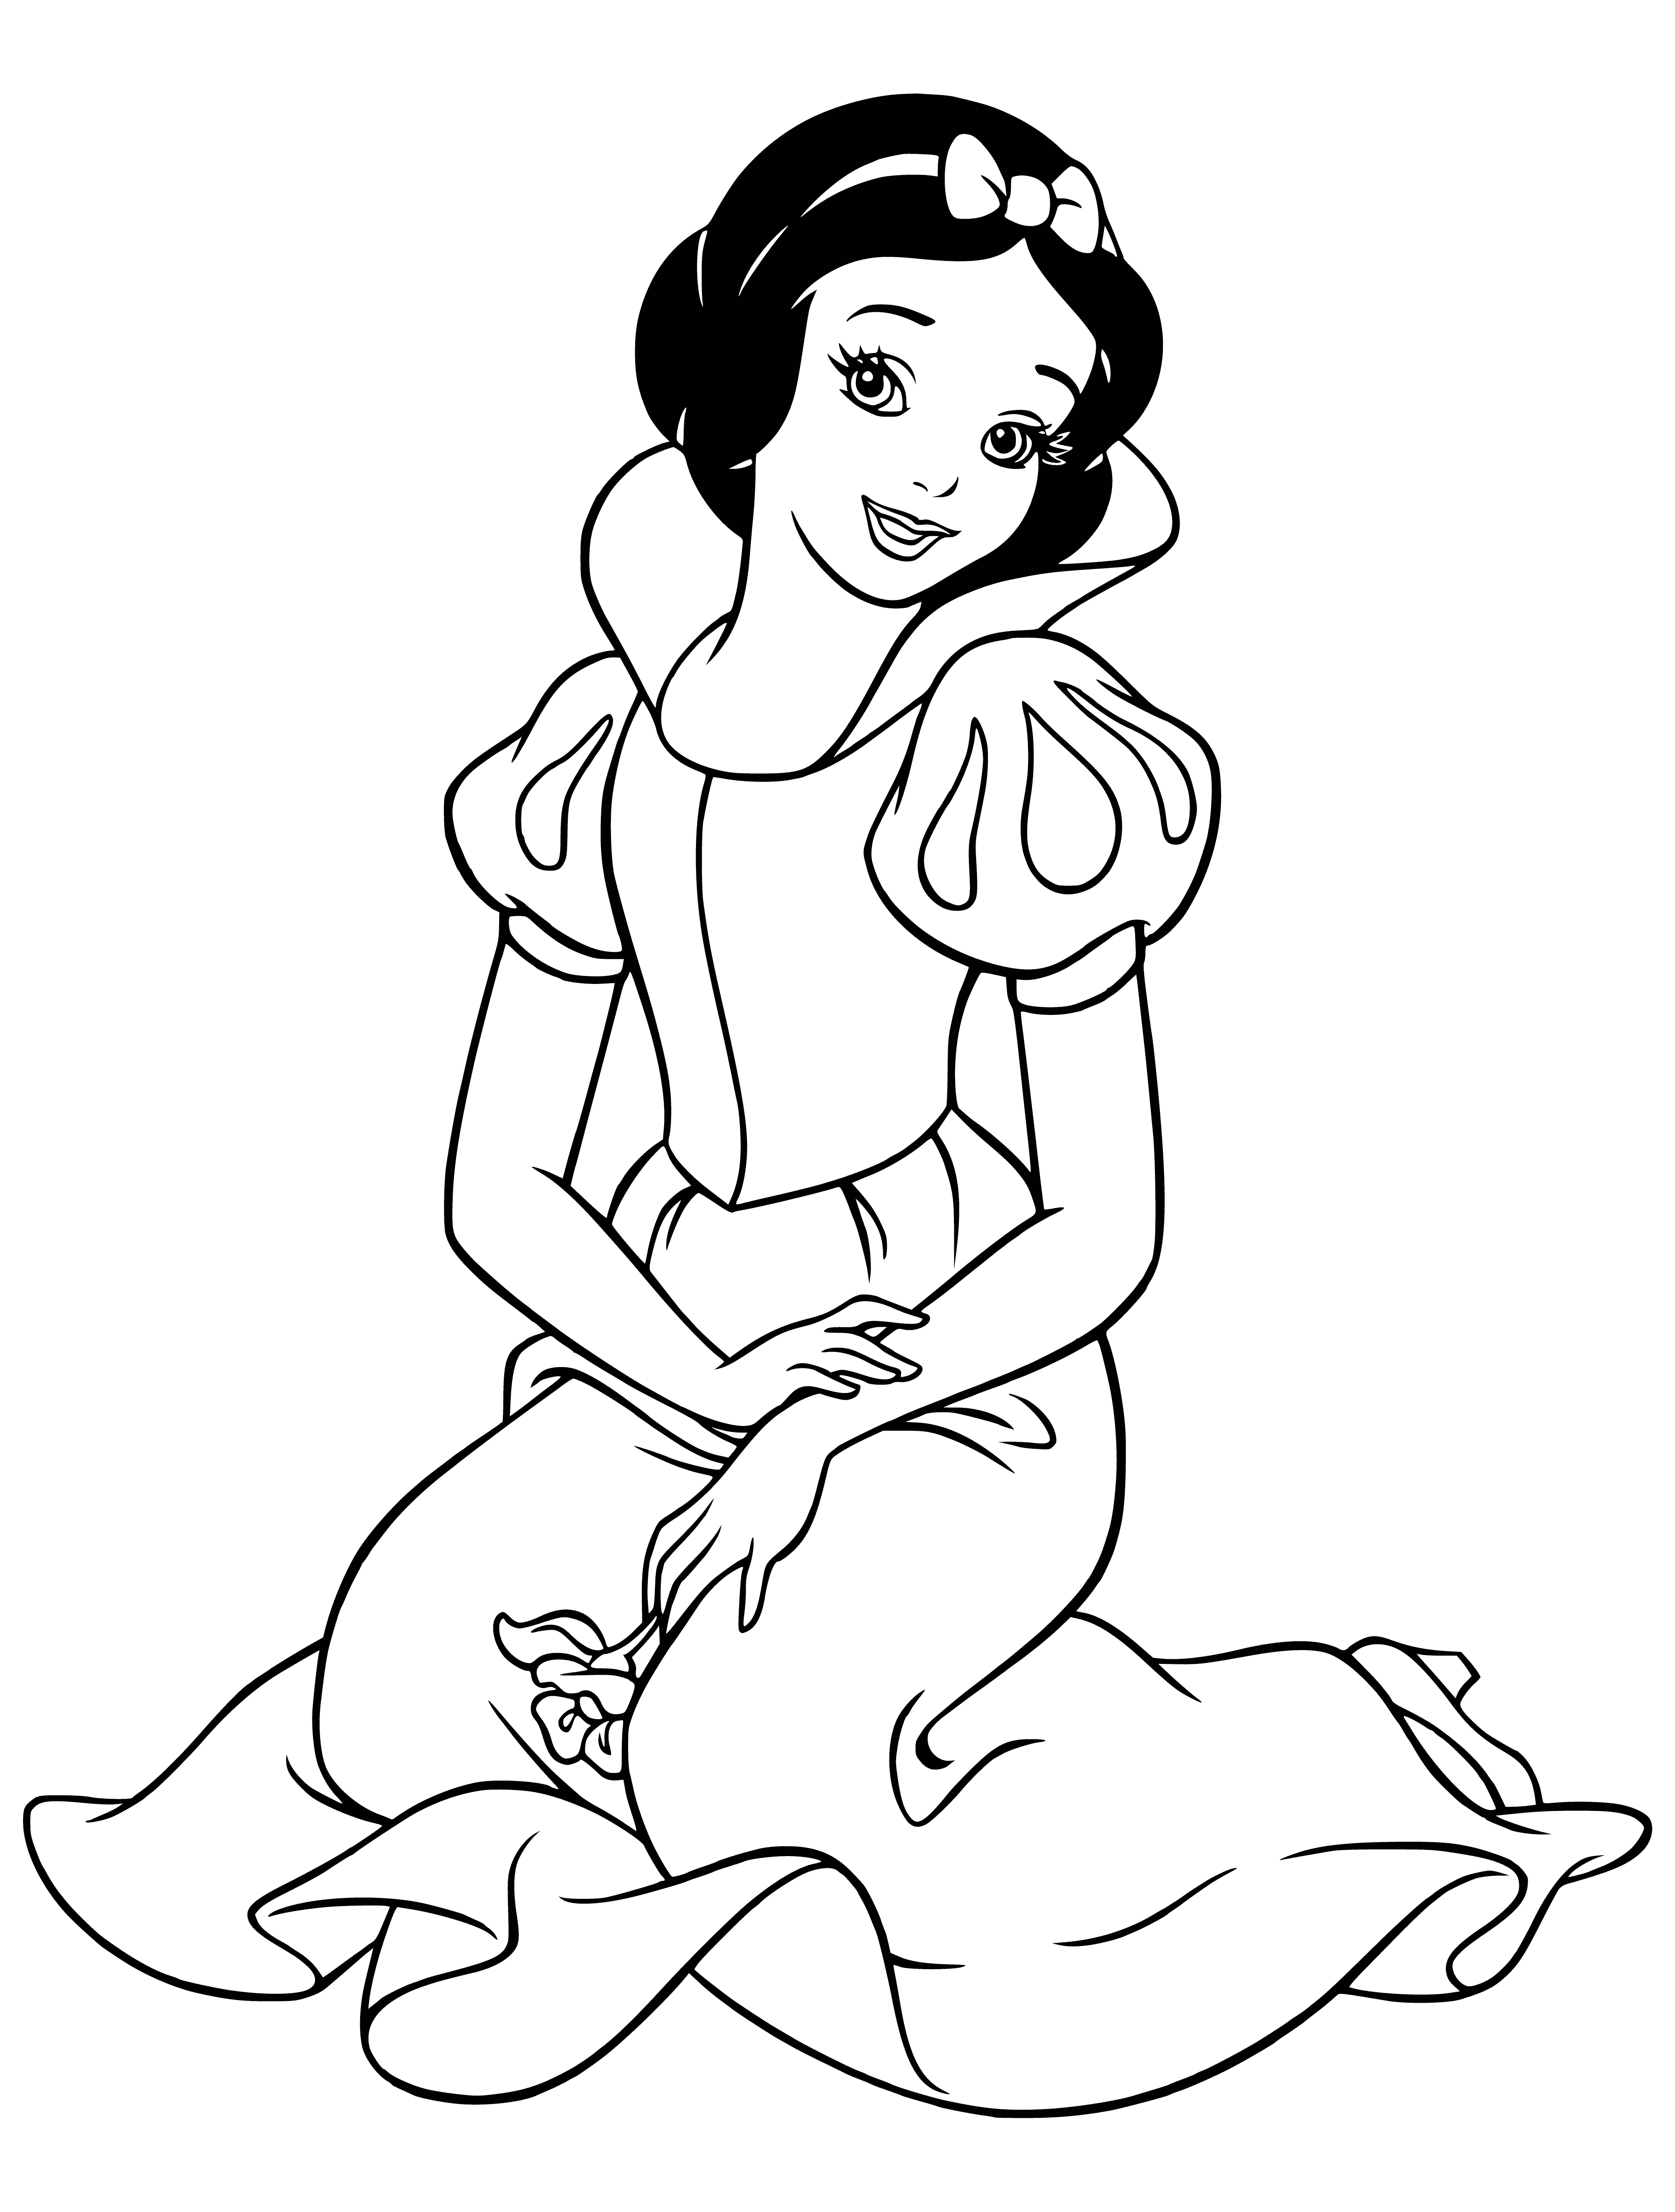 Disney Princess Snow White coloring page